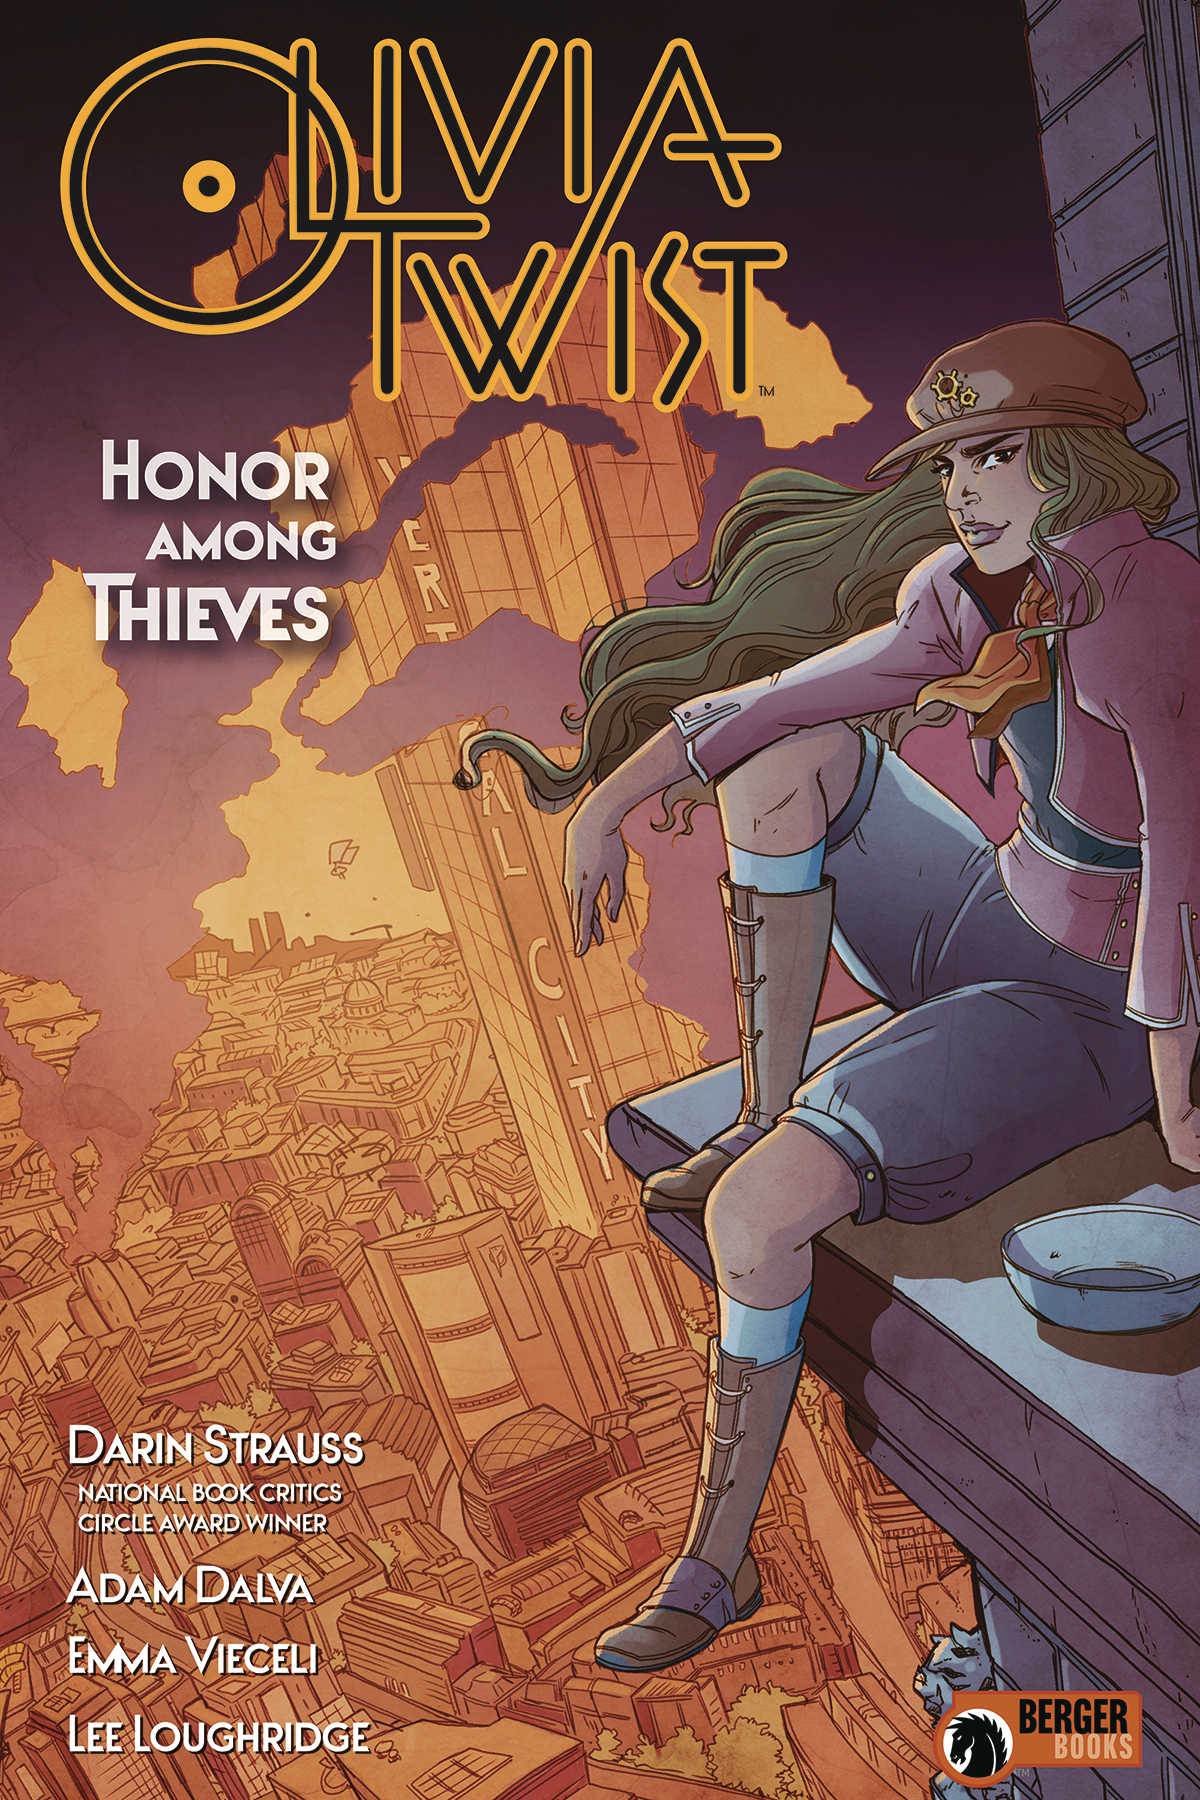 Olivia Twist Graphic Novel Honor Among Thieves